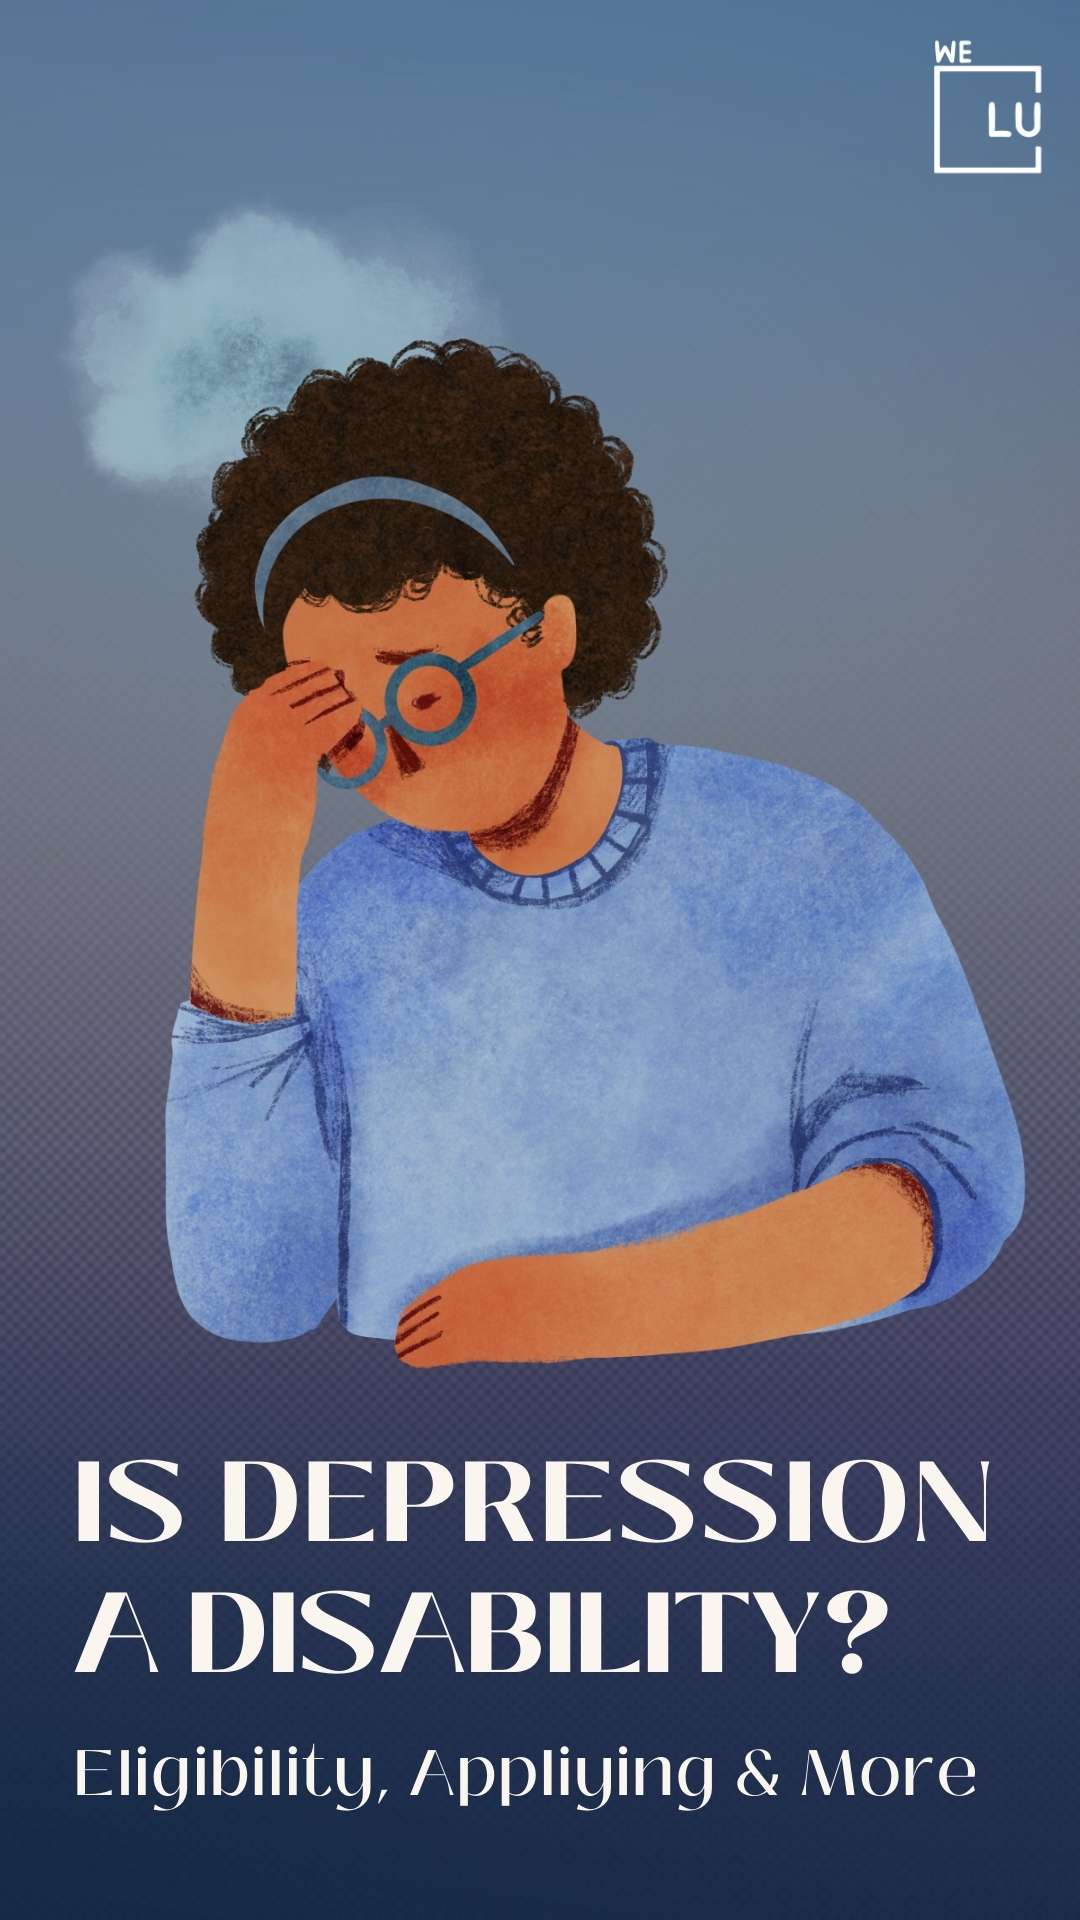 Effective Depression Treatment, Depressive Disorder Symptoms, Types, & Causes